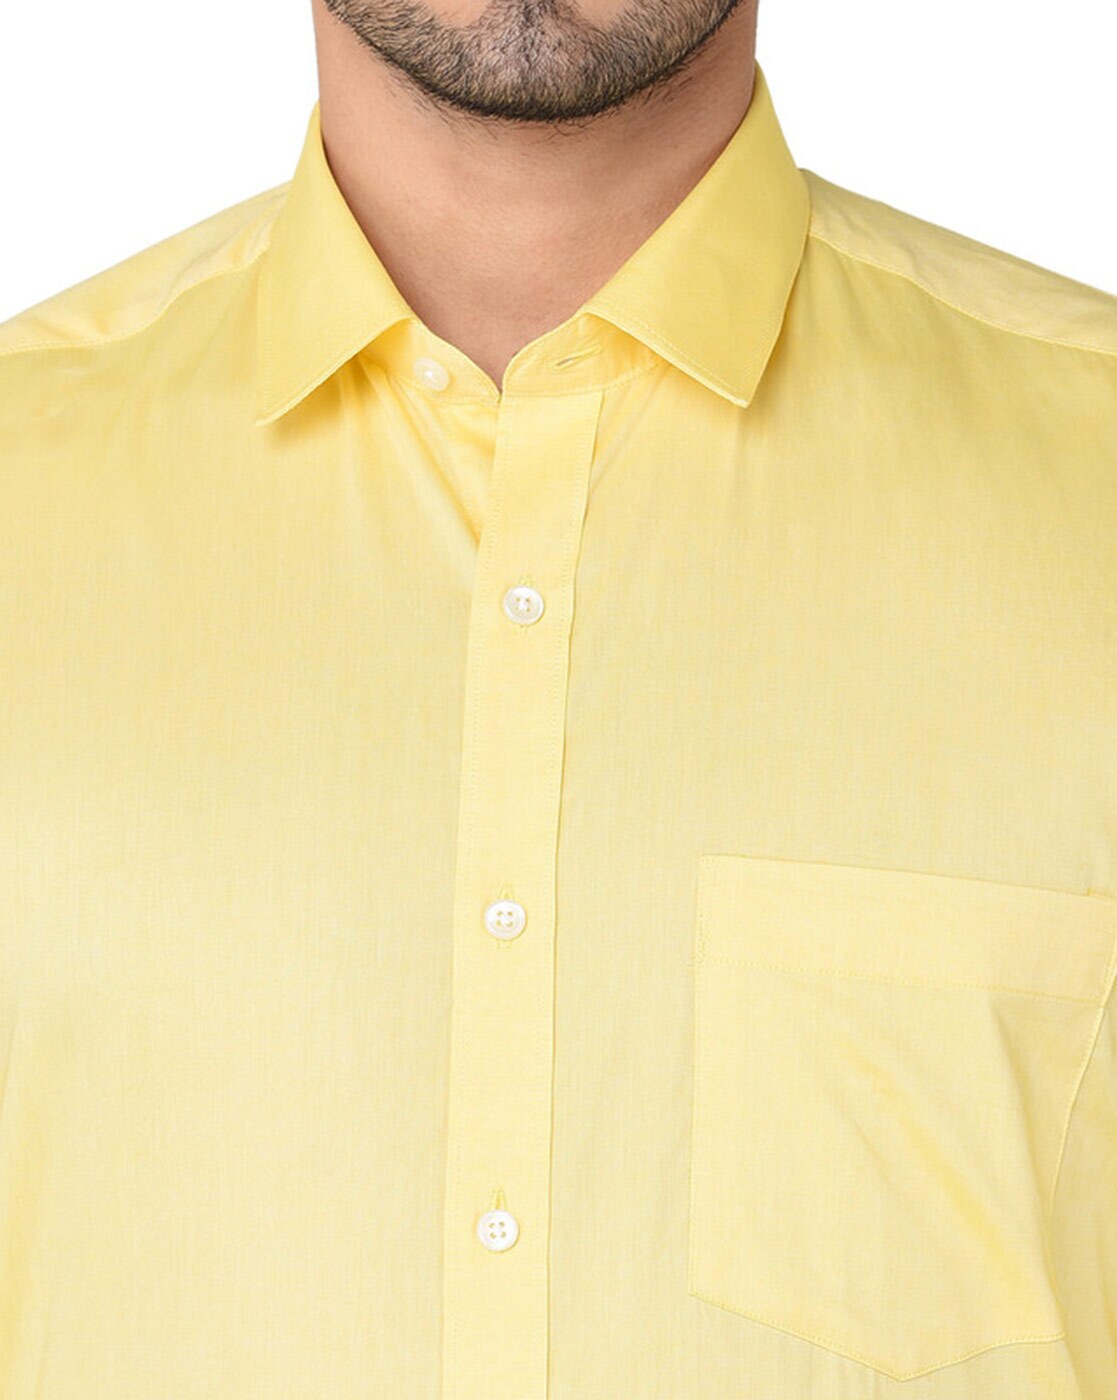 Cotton Linen Lime Green Colour Shirt Half Sleeve | waterworxservices.com